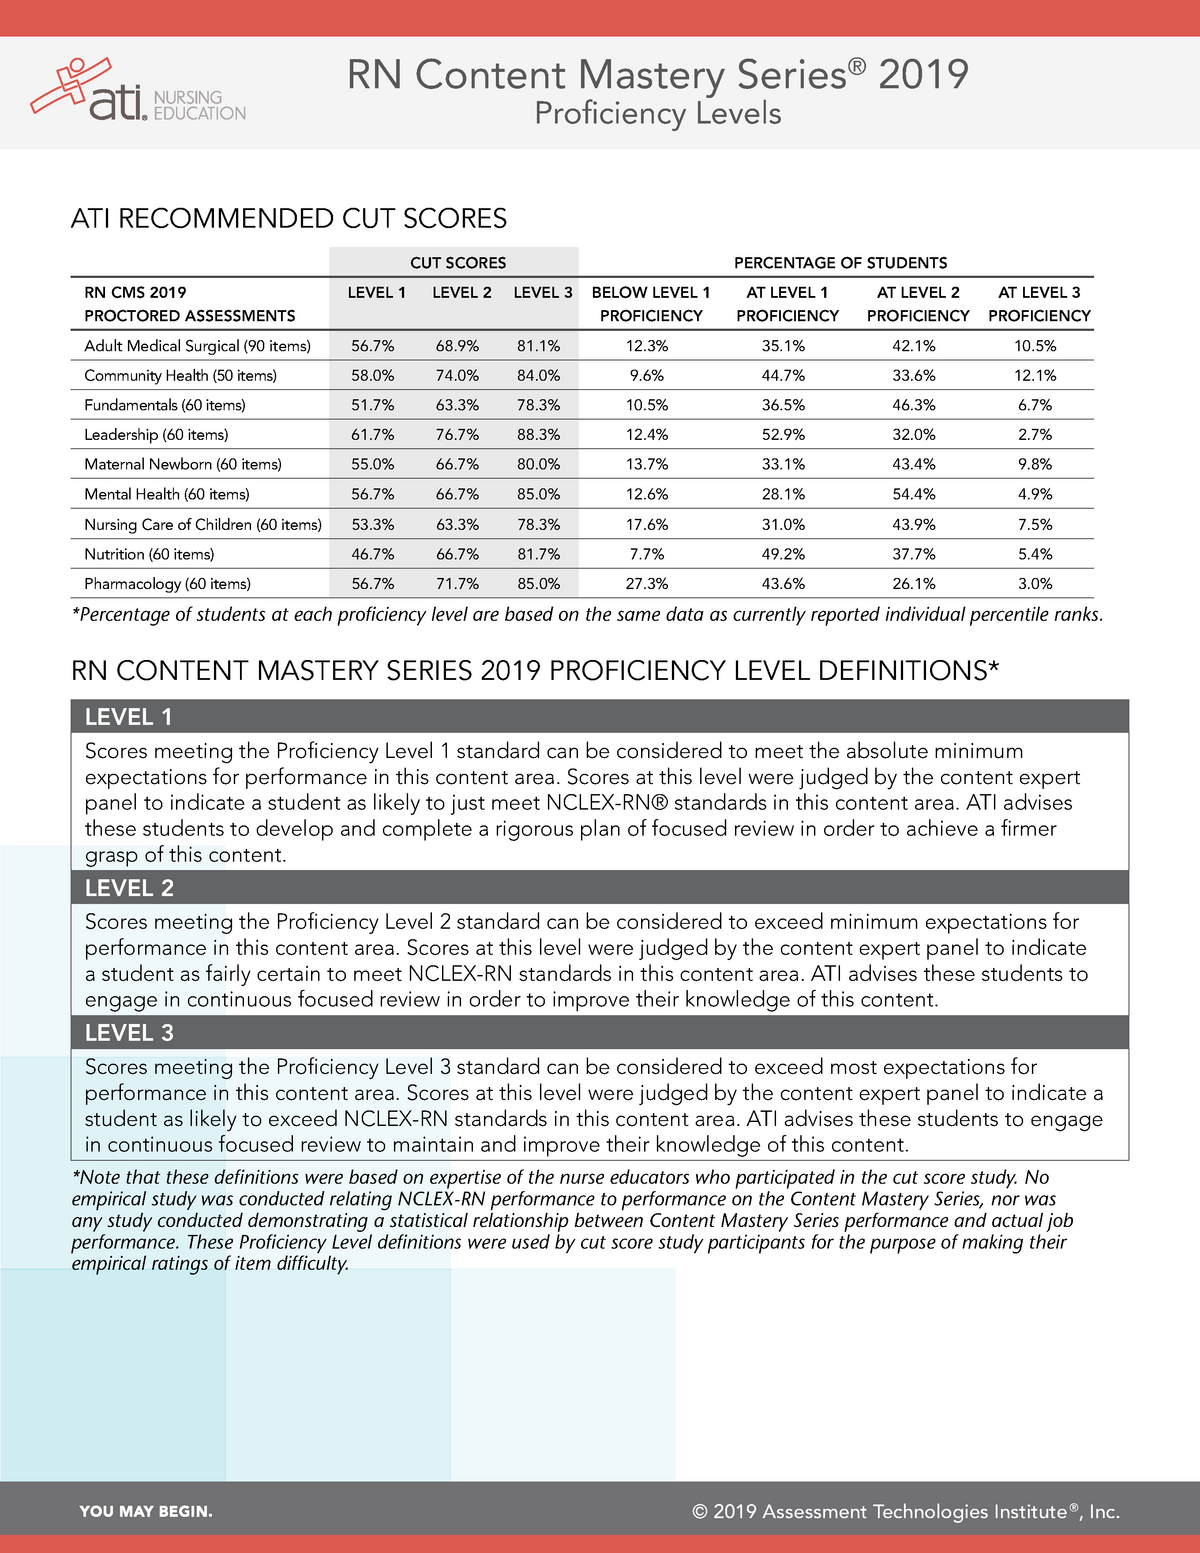 ATI 2019 Proficiency Table © 2019 Assessment Technologies Institute